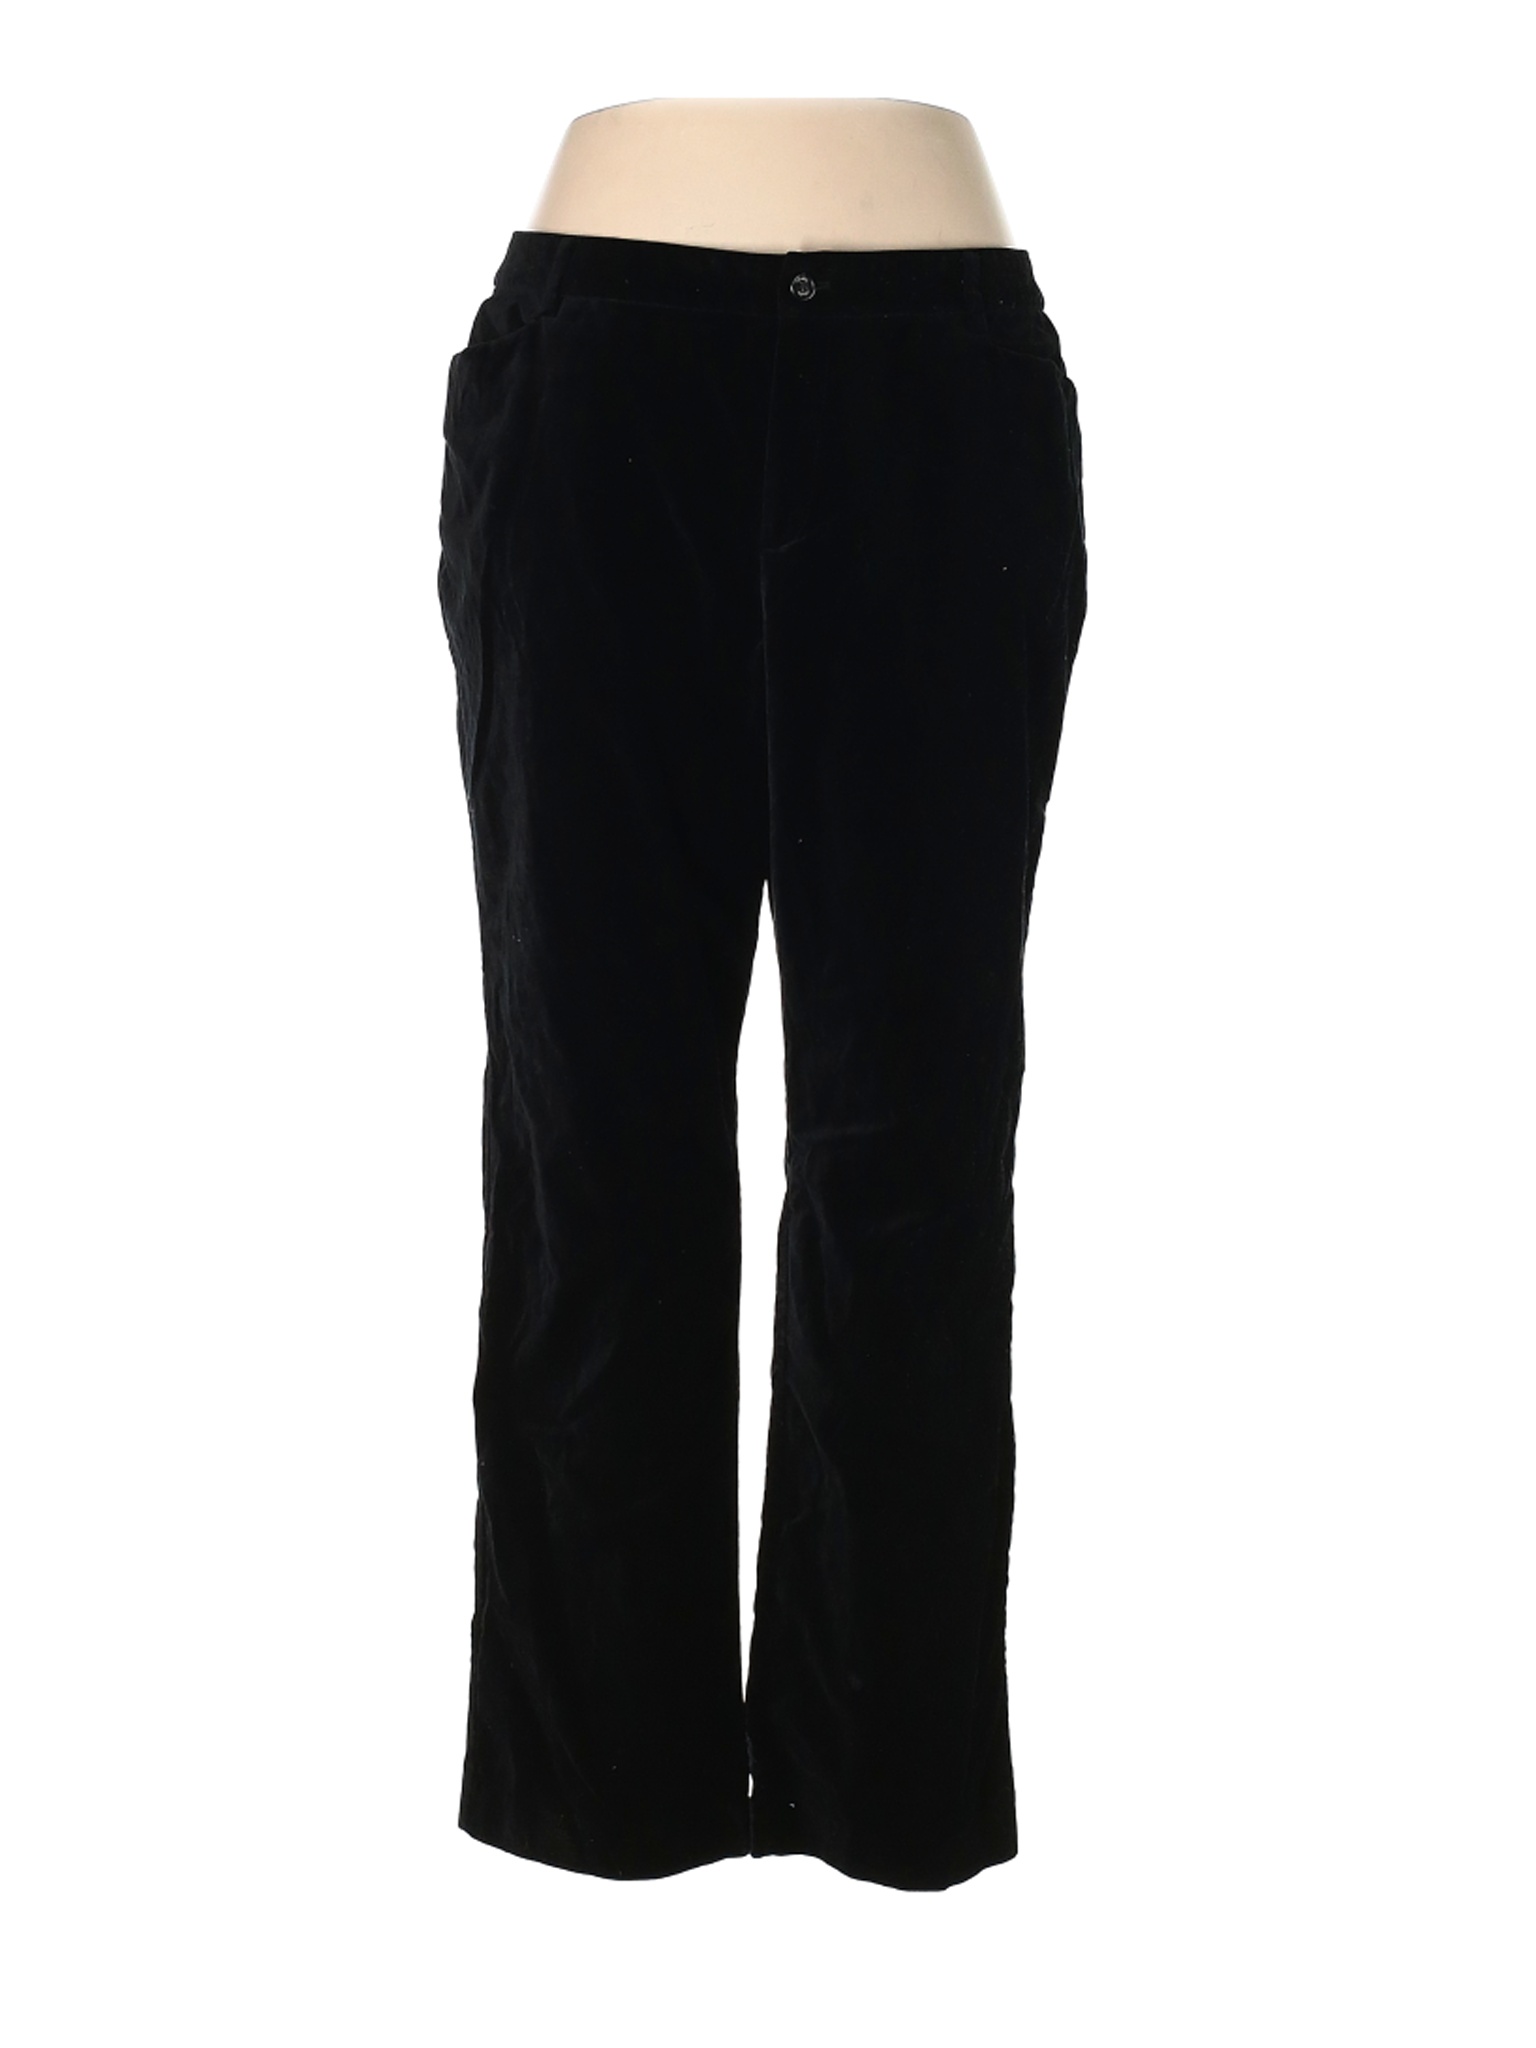 Chaps Women Black Casual Pants 16 | eBay